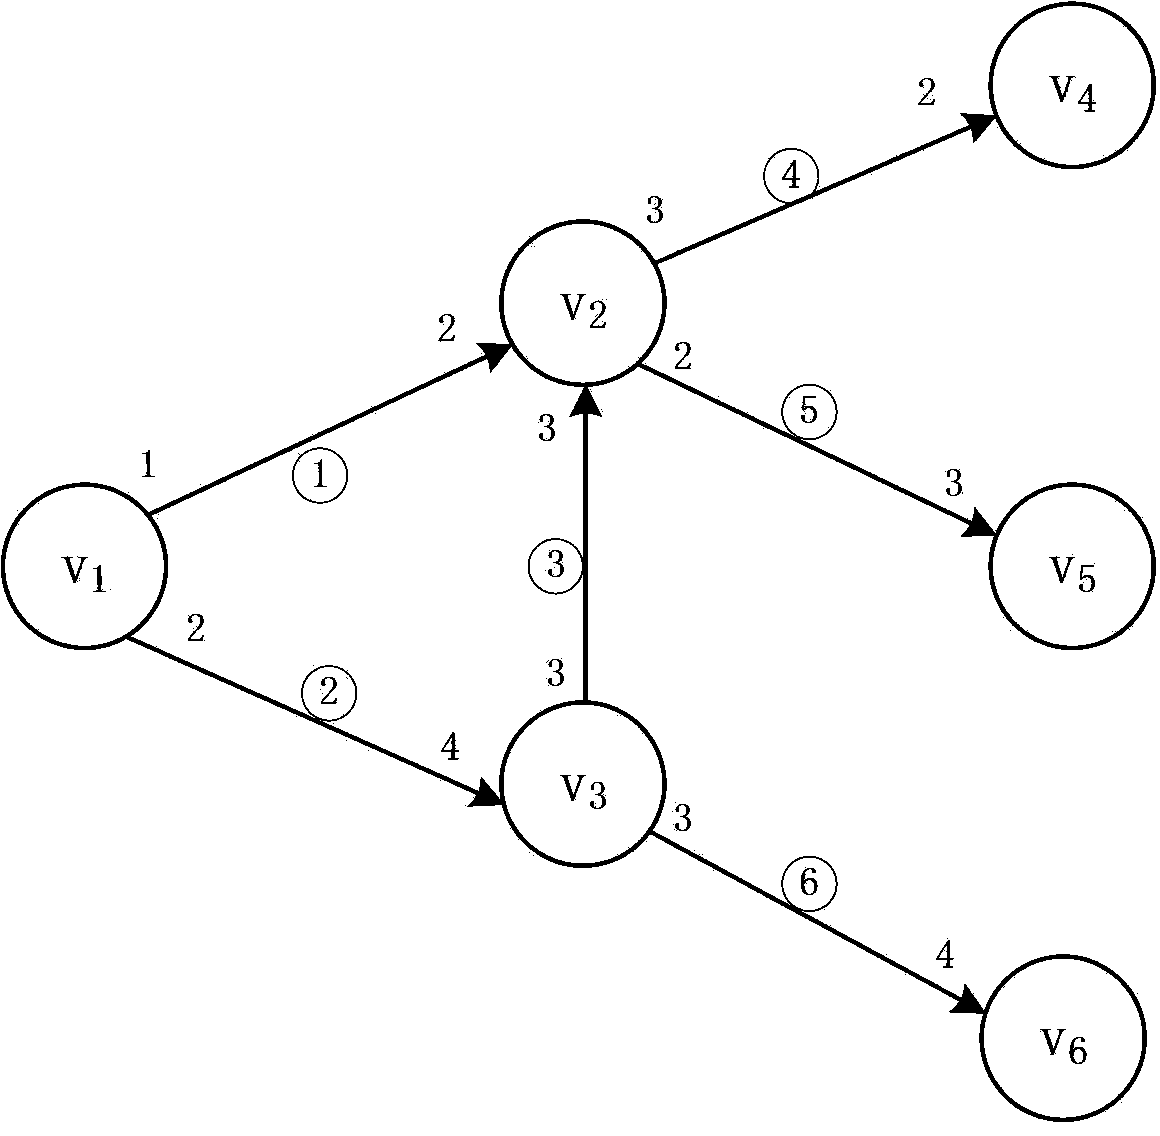 Fast processing method of ergodic synchronous data flow system node parameter based on graphs